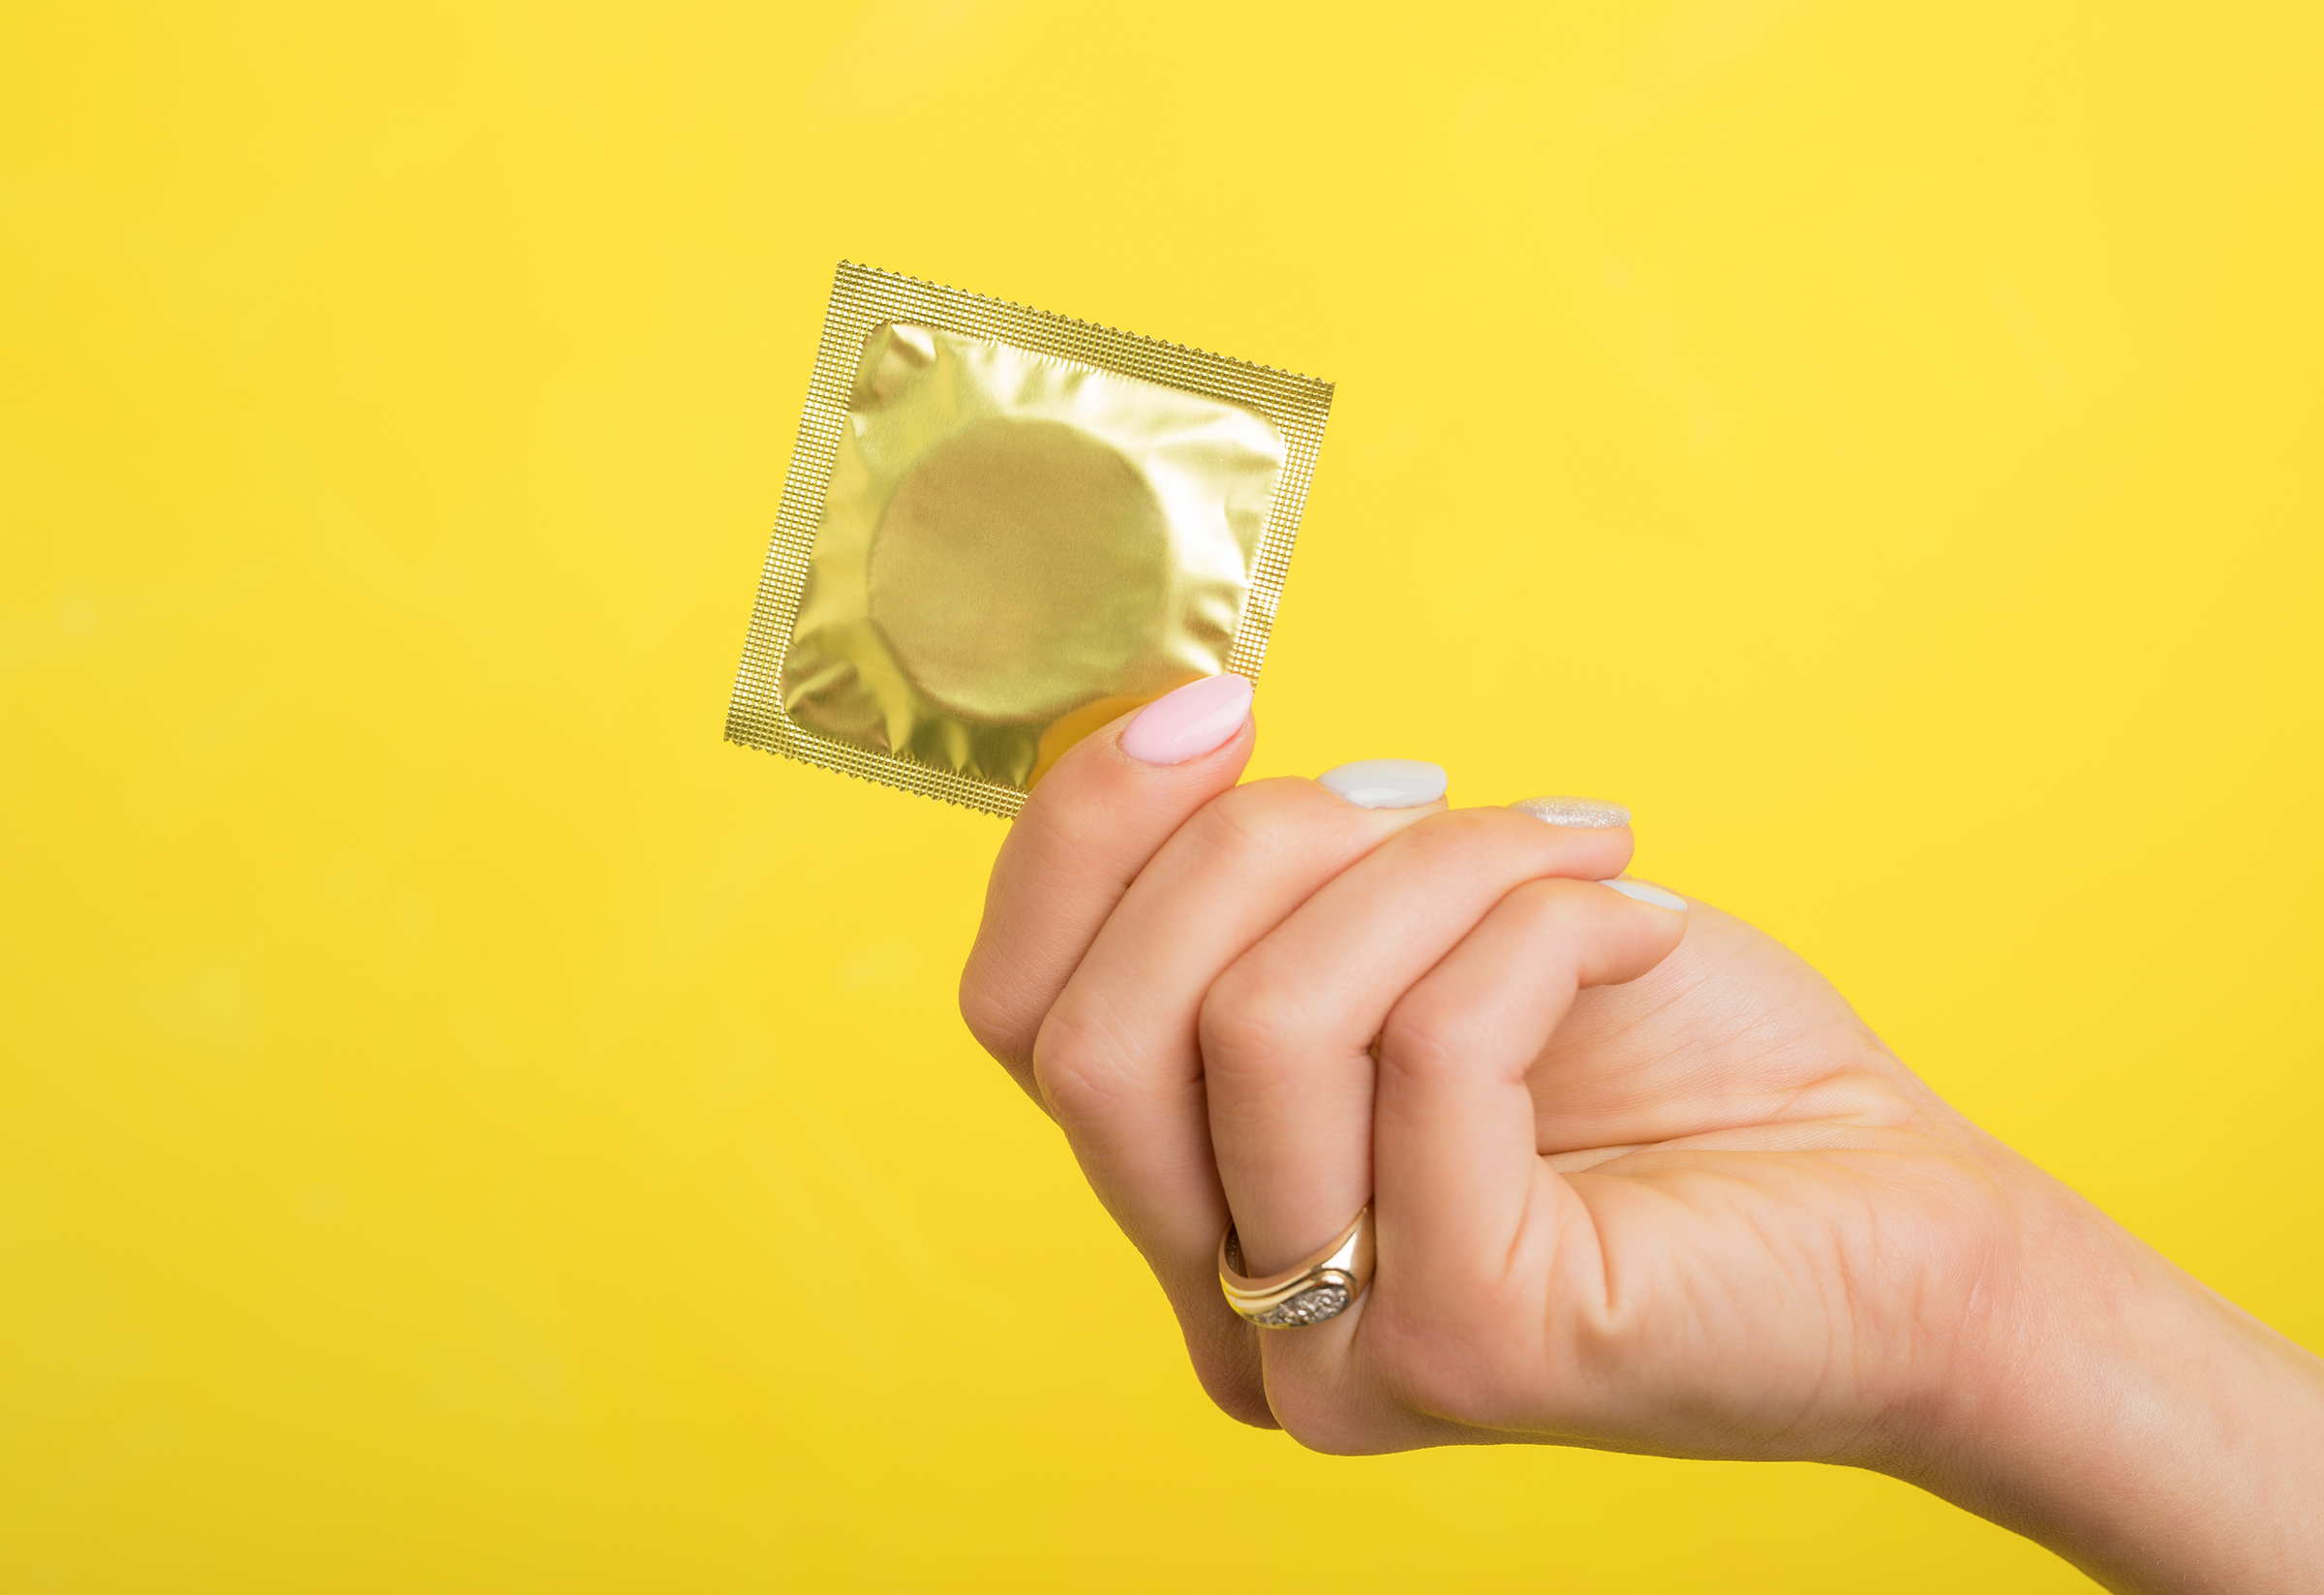 Condom Broke On Birth Control